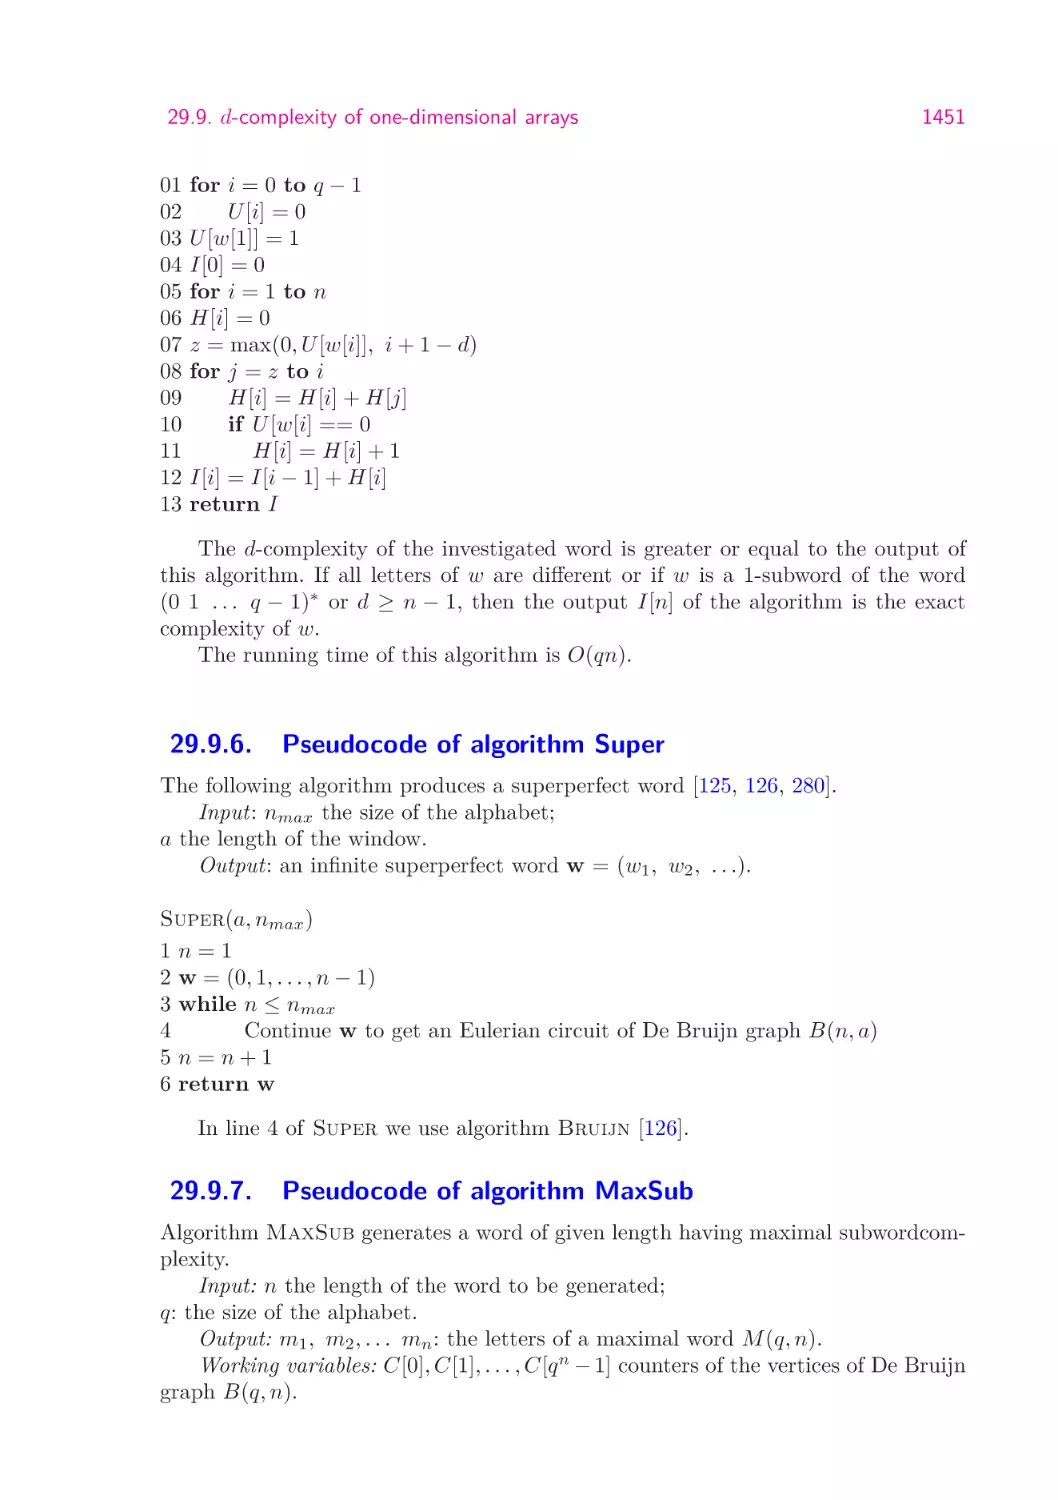 29.9.6.   Pseudocode of algorithm Super
29.9.7.   Pseudocode of algorithm MaxSub